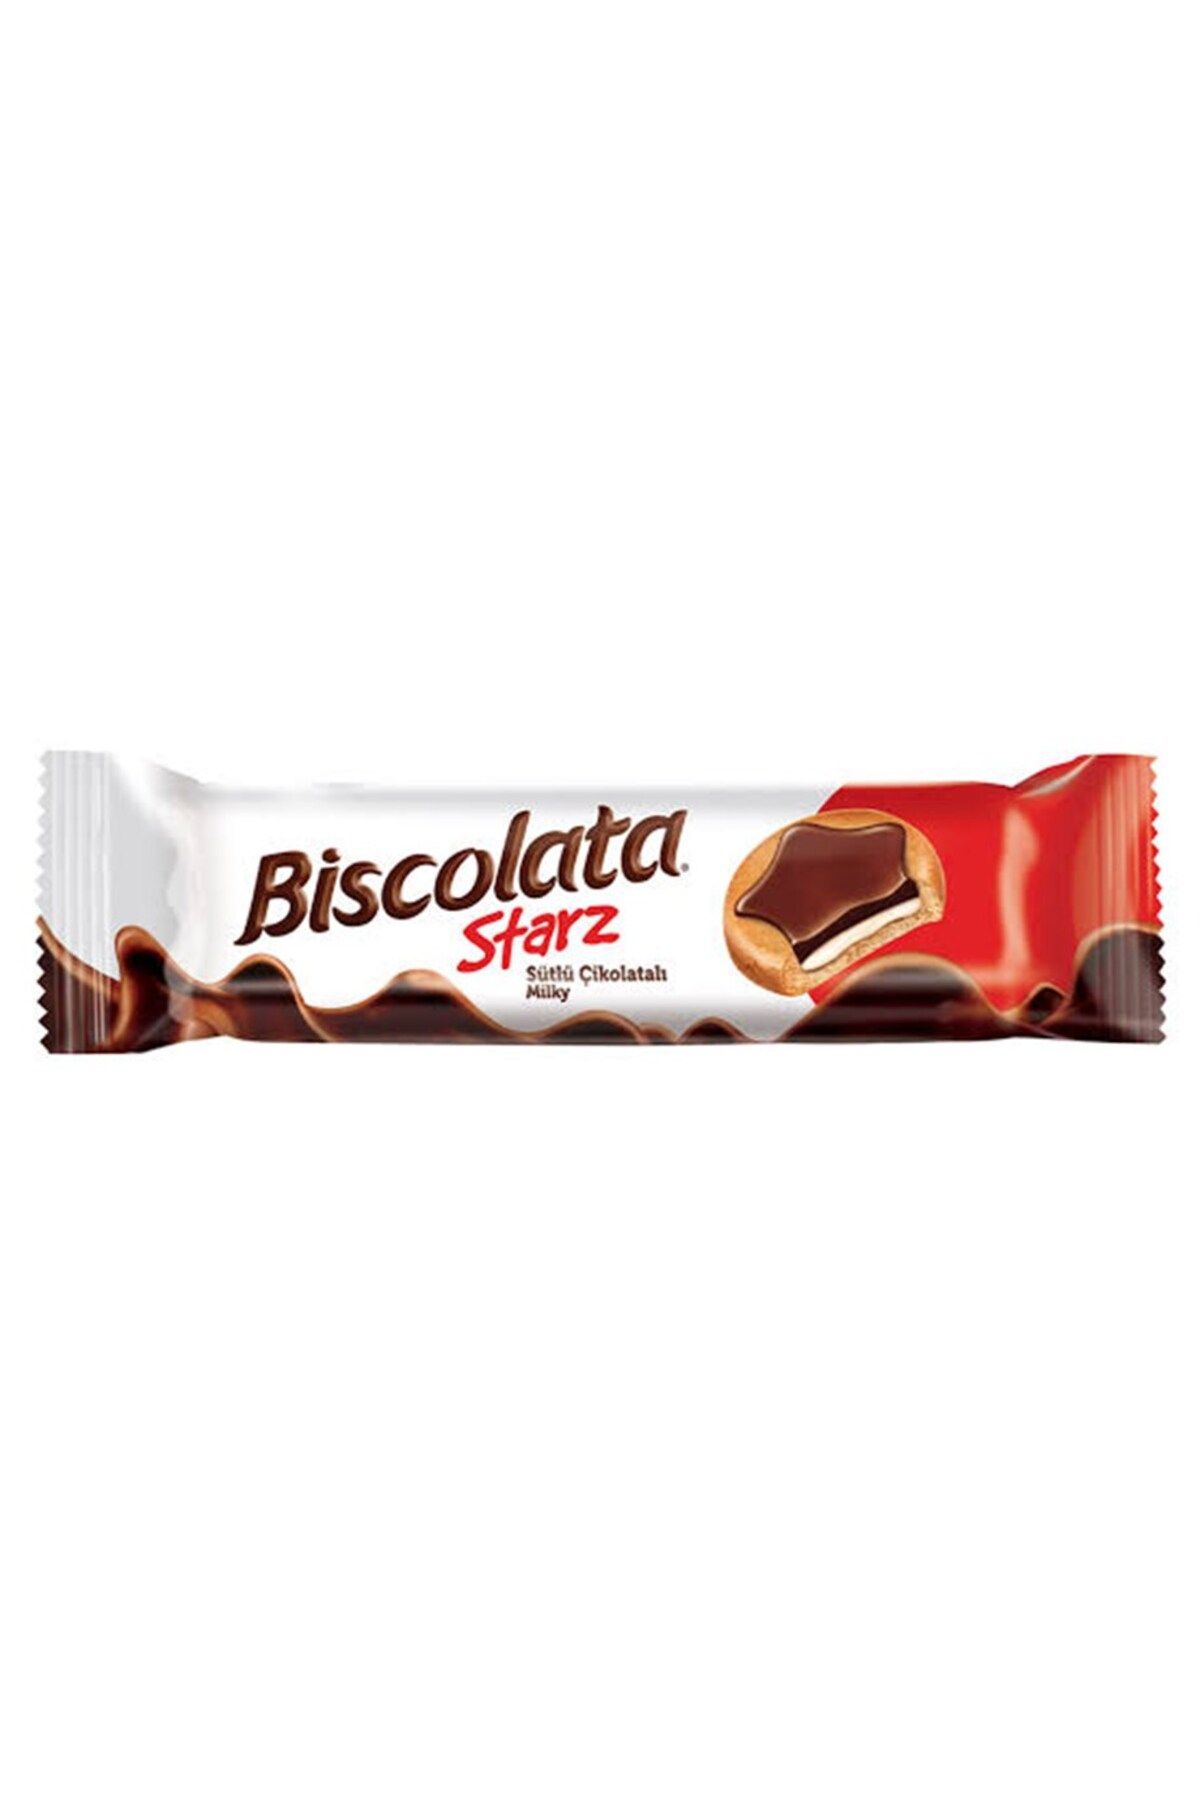 Şölen Biscolata Starz Sütlü Çikolatalı 82 G